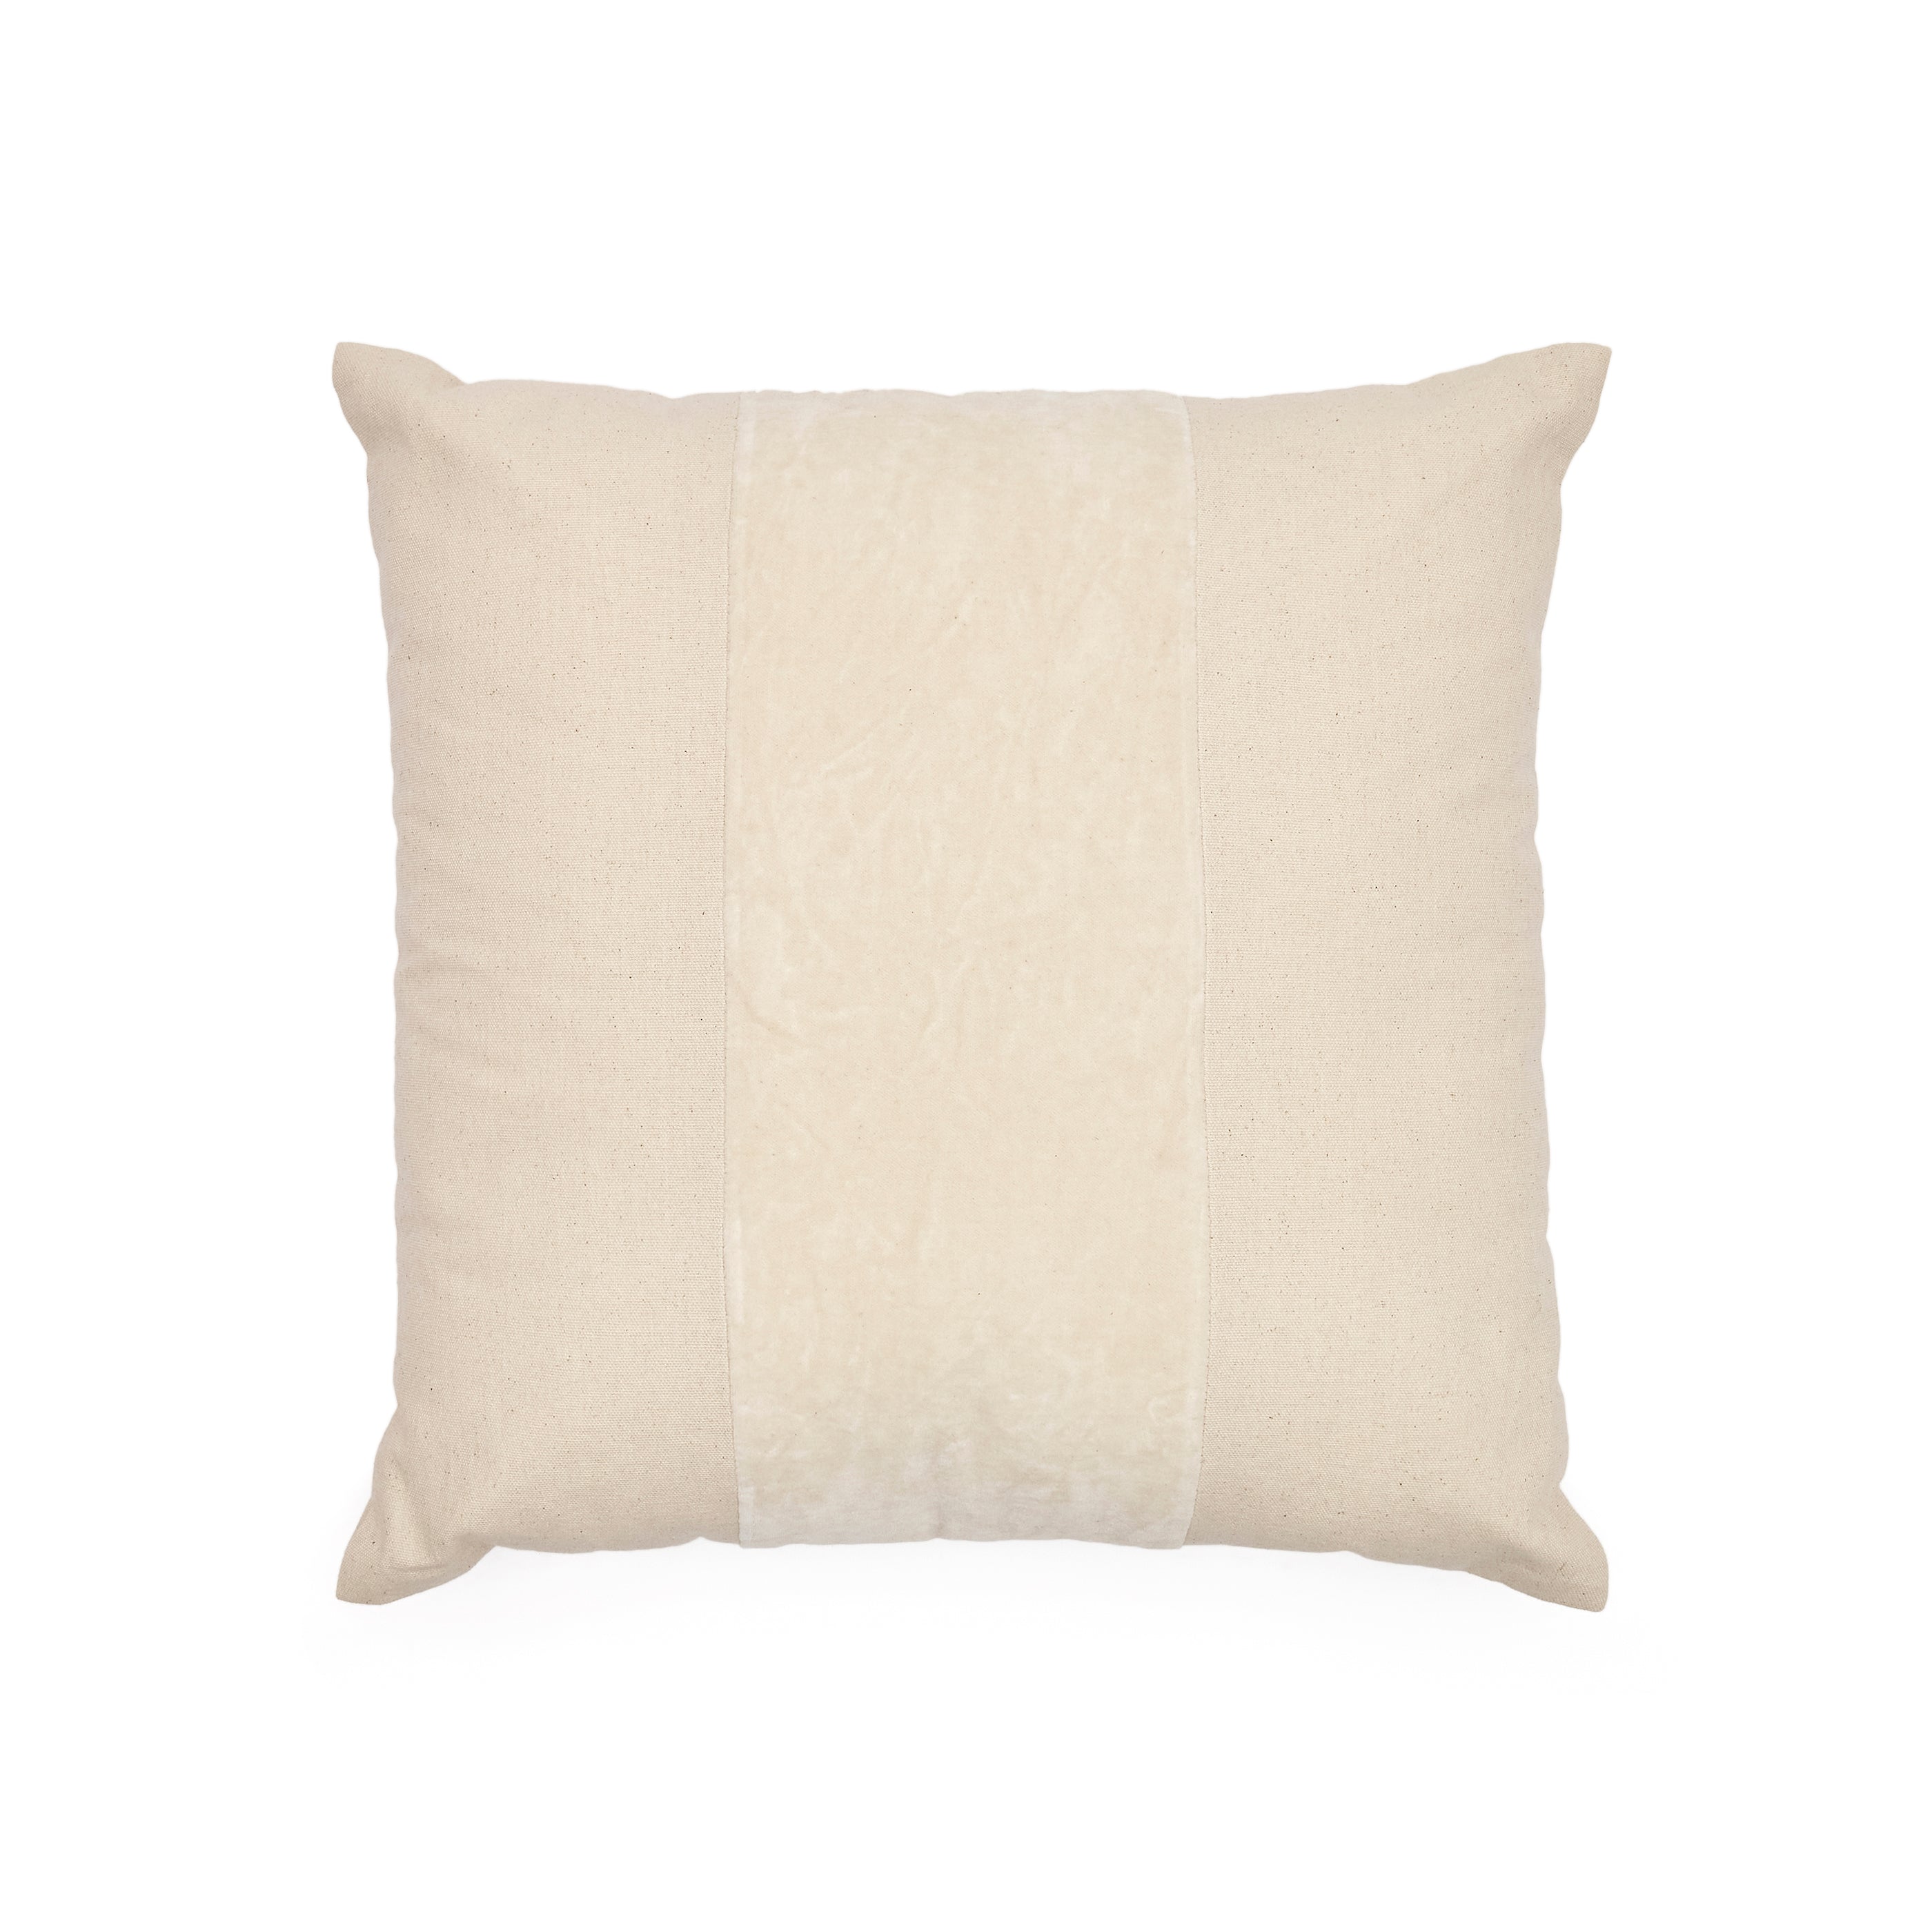 Zaira pillowcase made of 100% cotton and white velvet 45 x 45 cm